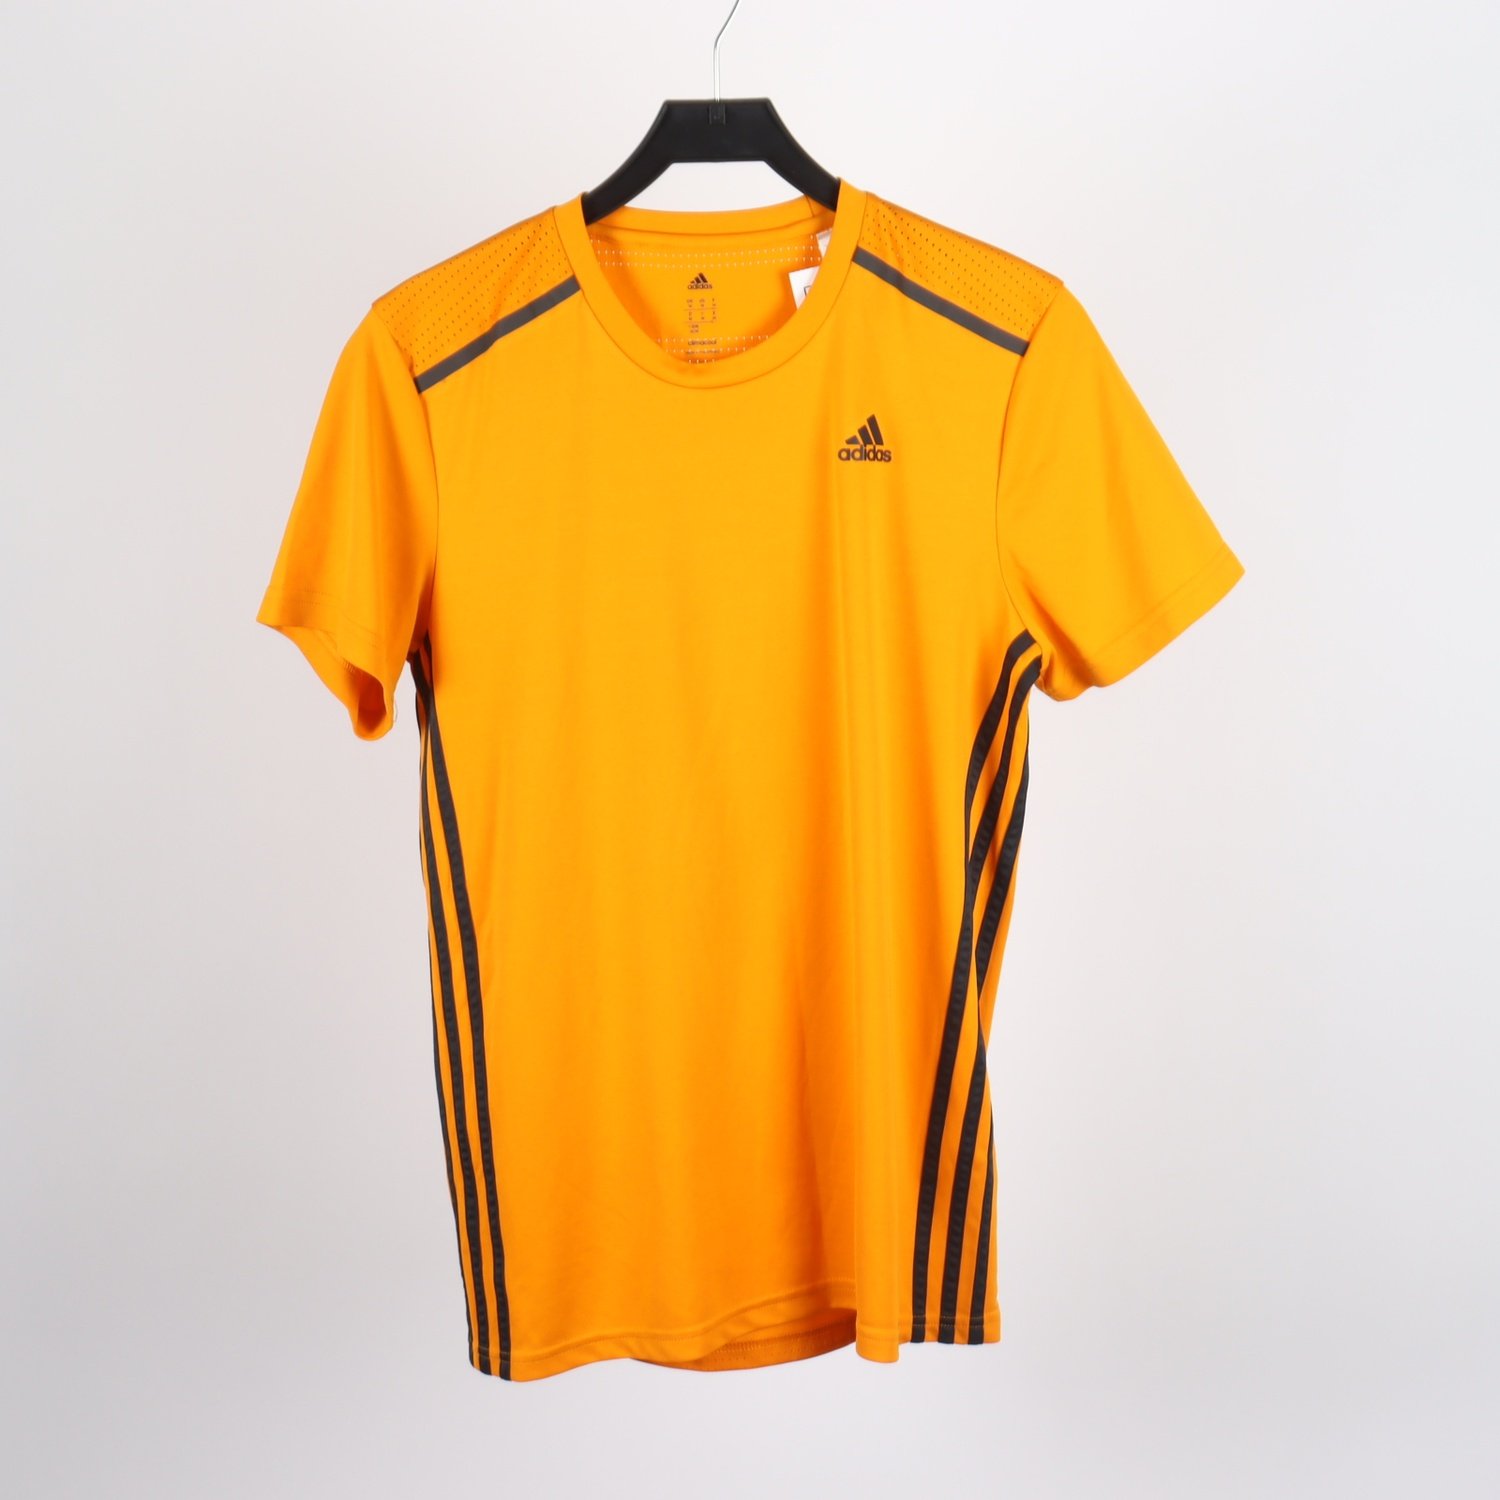 Träningströja, Adidas, orange/gul, stl.M